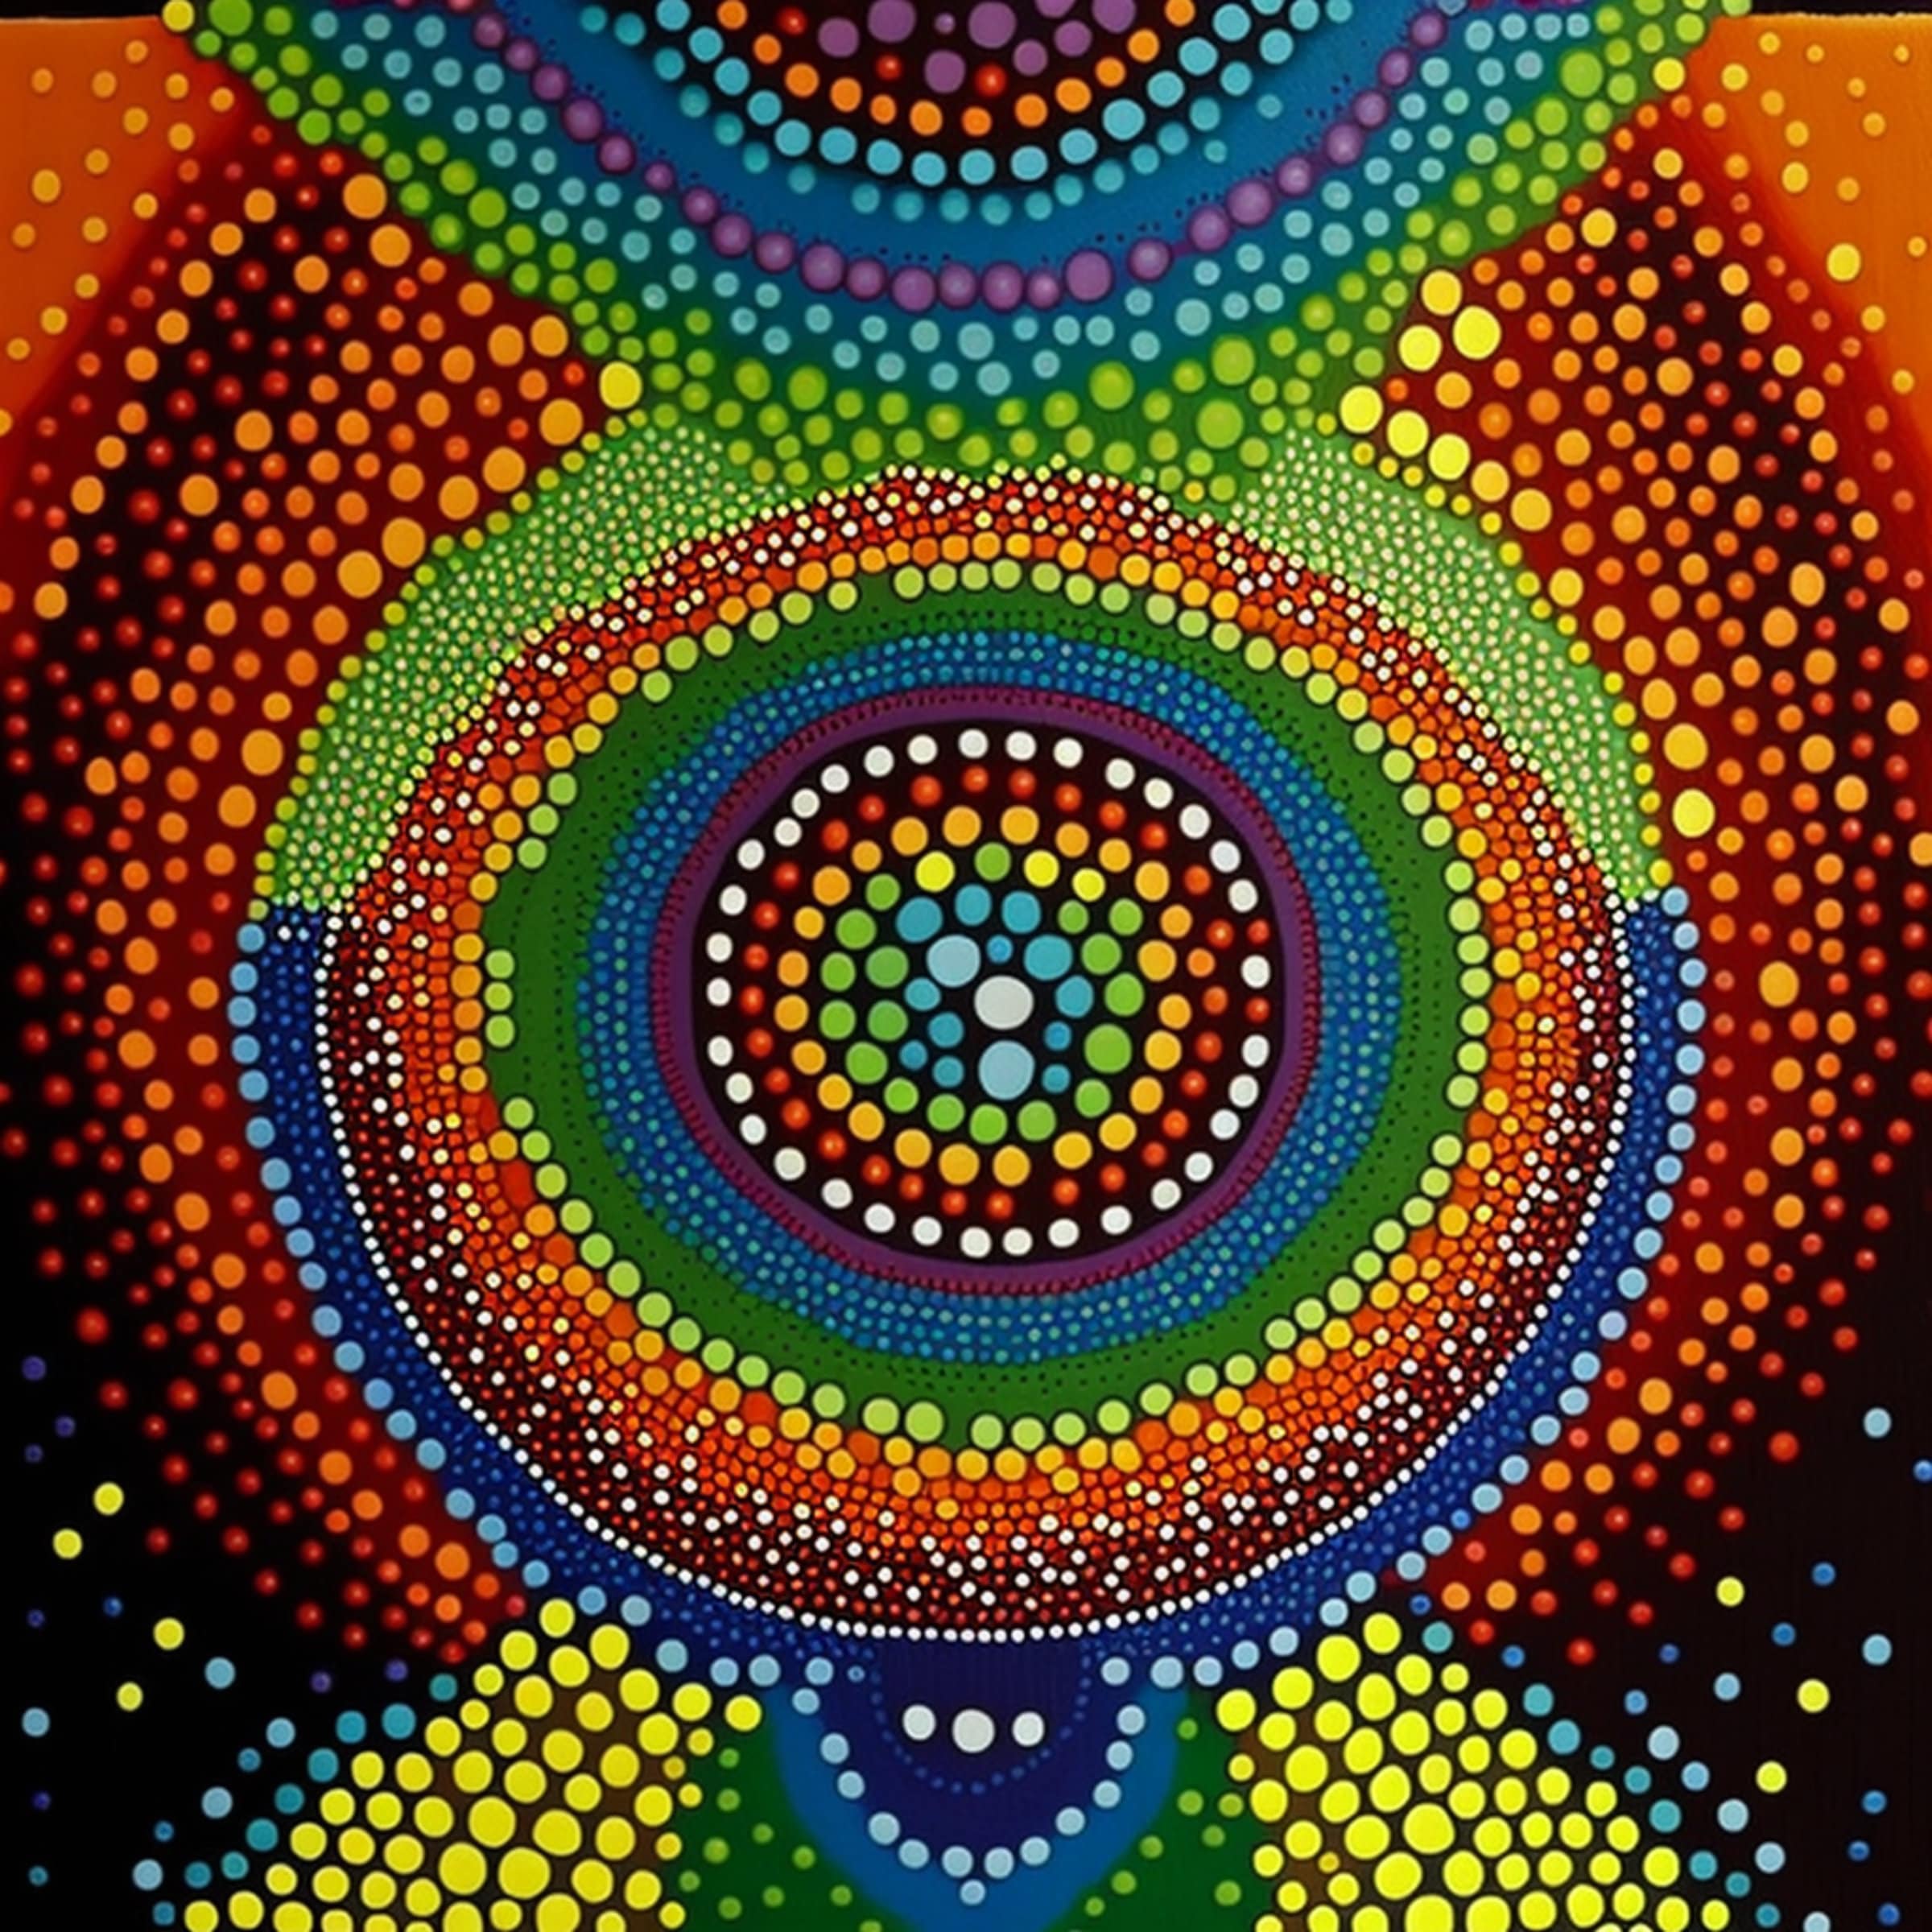 Aboriginal Art Inspired Tree of Life a digital dot art painting